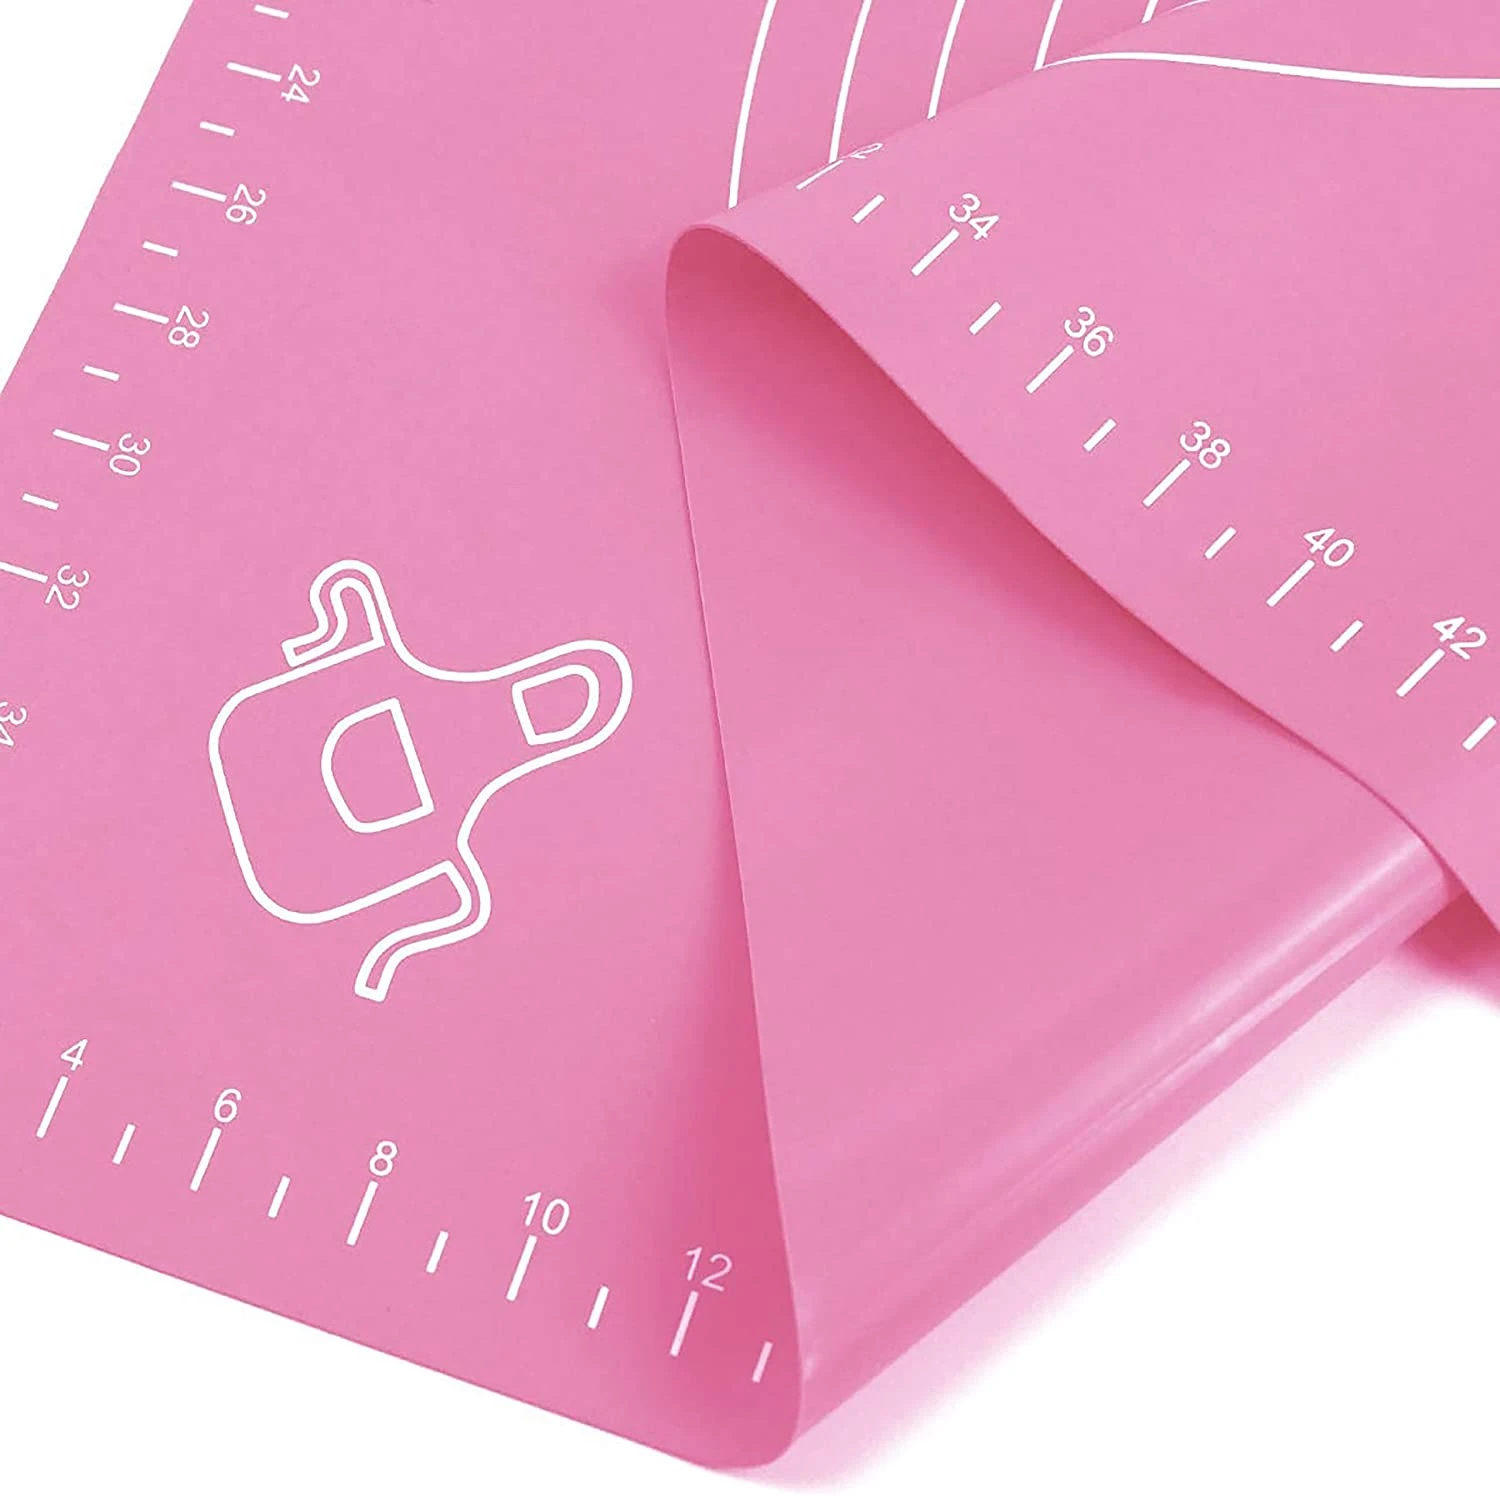 2021 Premium High-end Pink Silicon Sheet Silicone Baking Mat